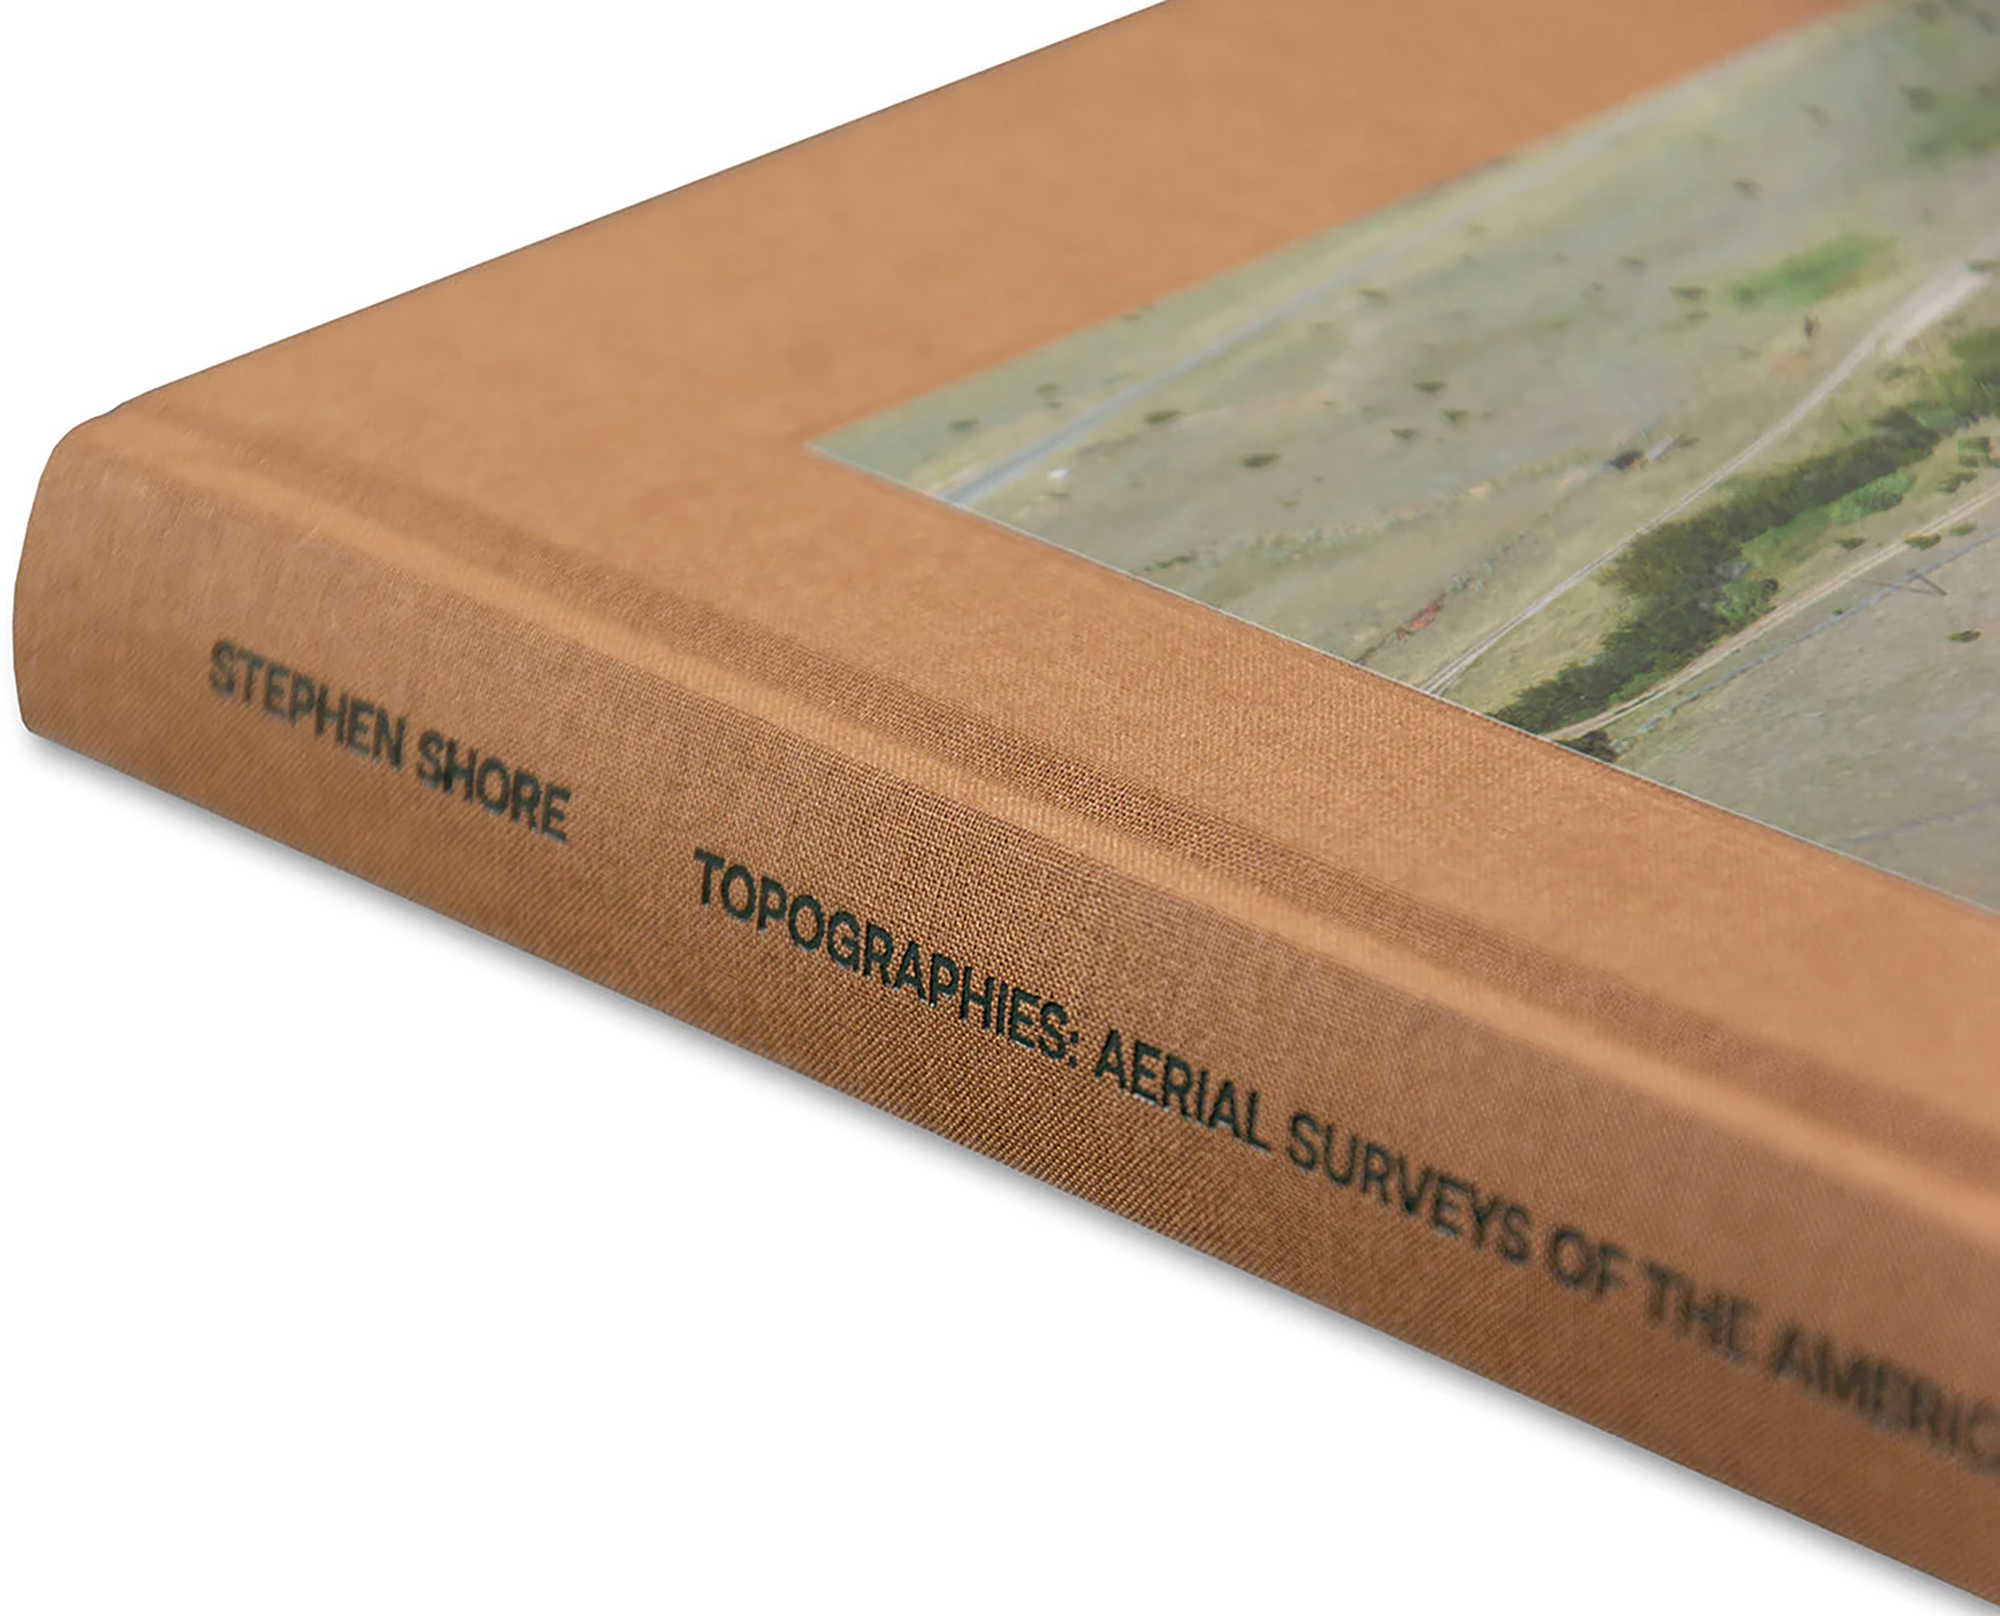 A Bird's Eye View: Stephen Shore's "Topographies: Aerial Surveys of the American Landscape - Gessato